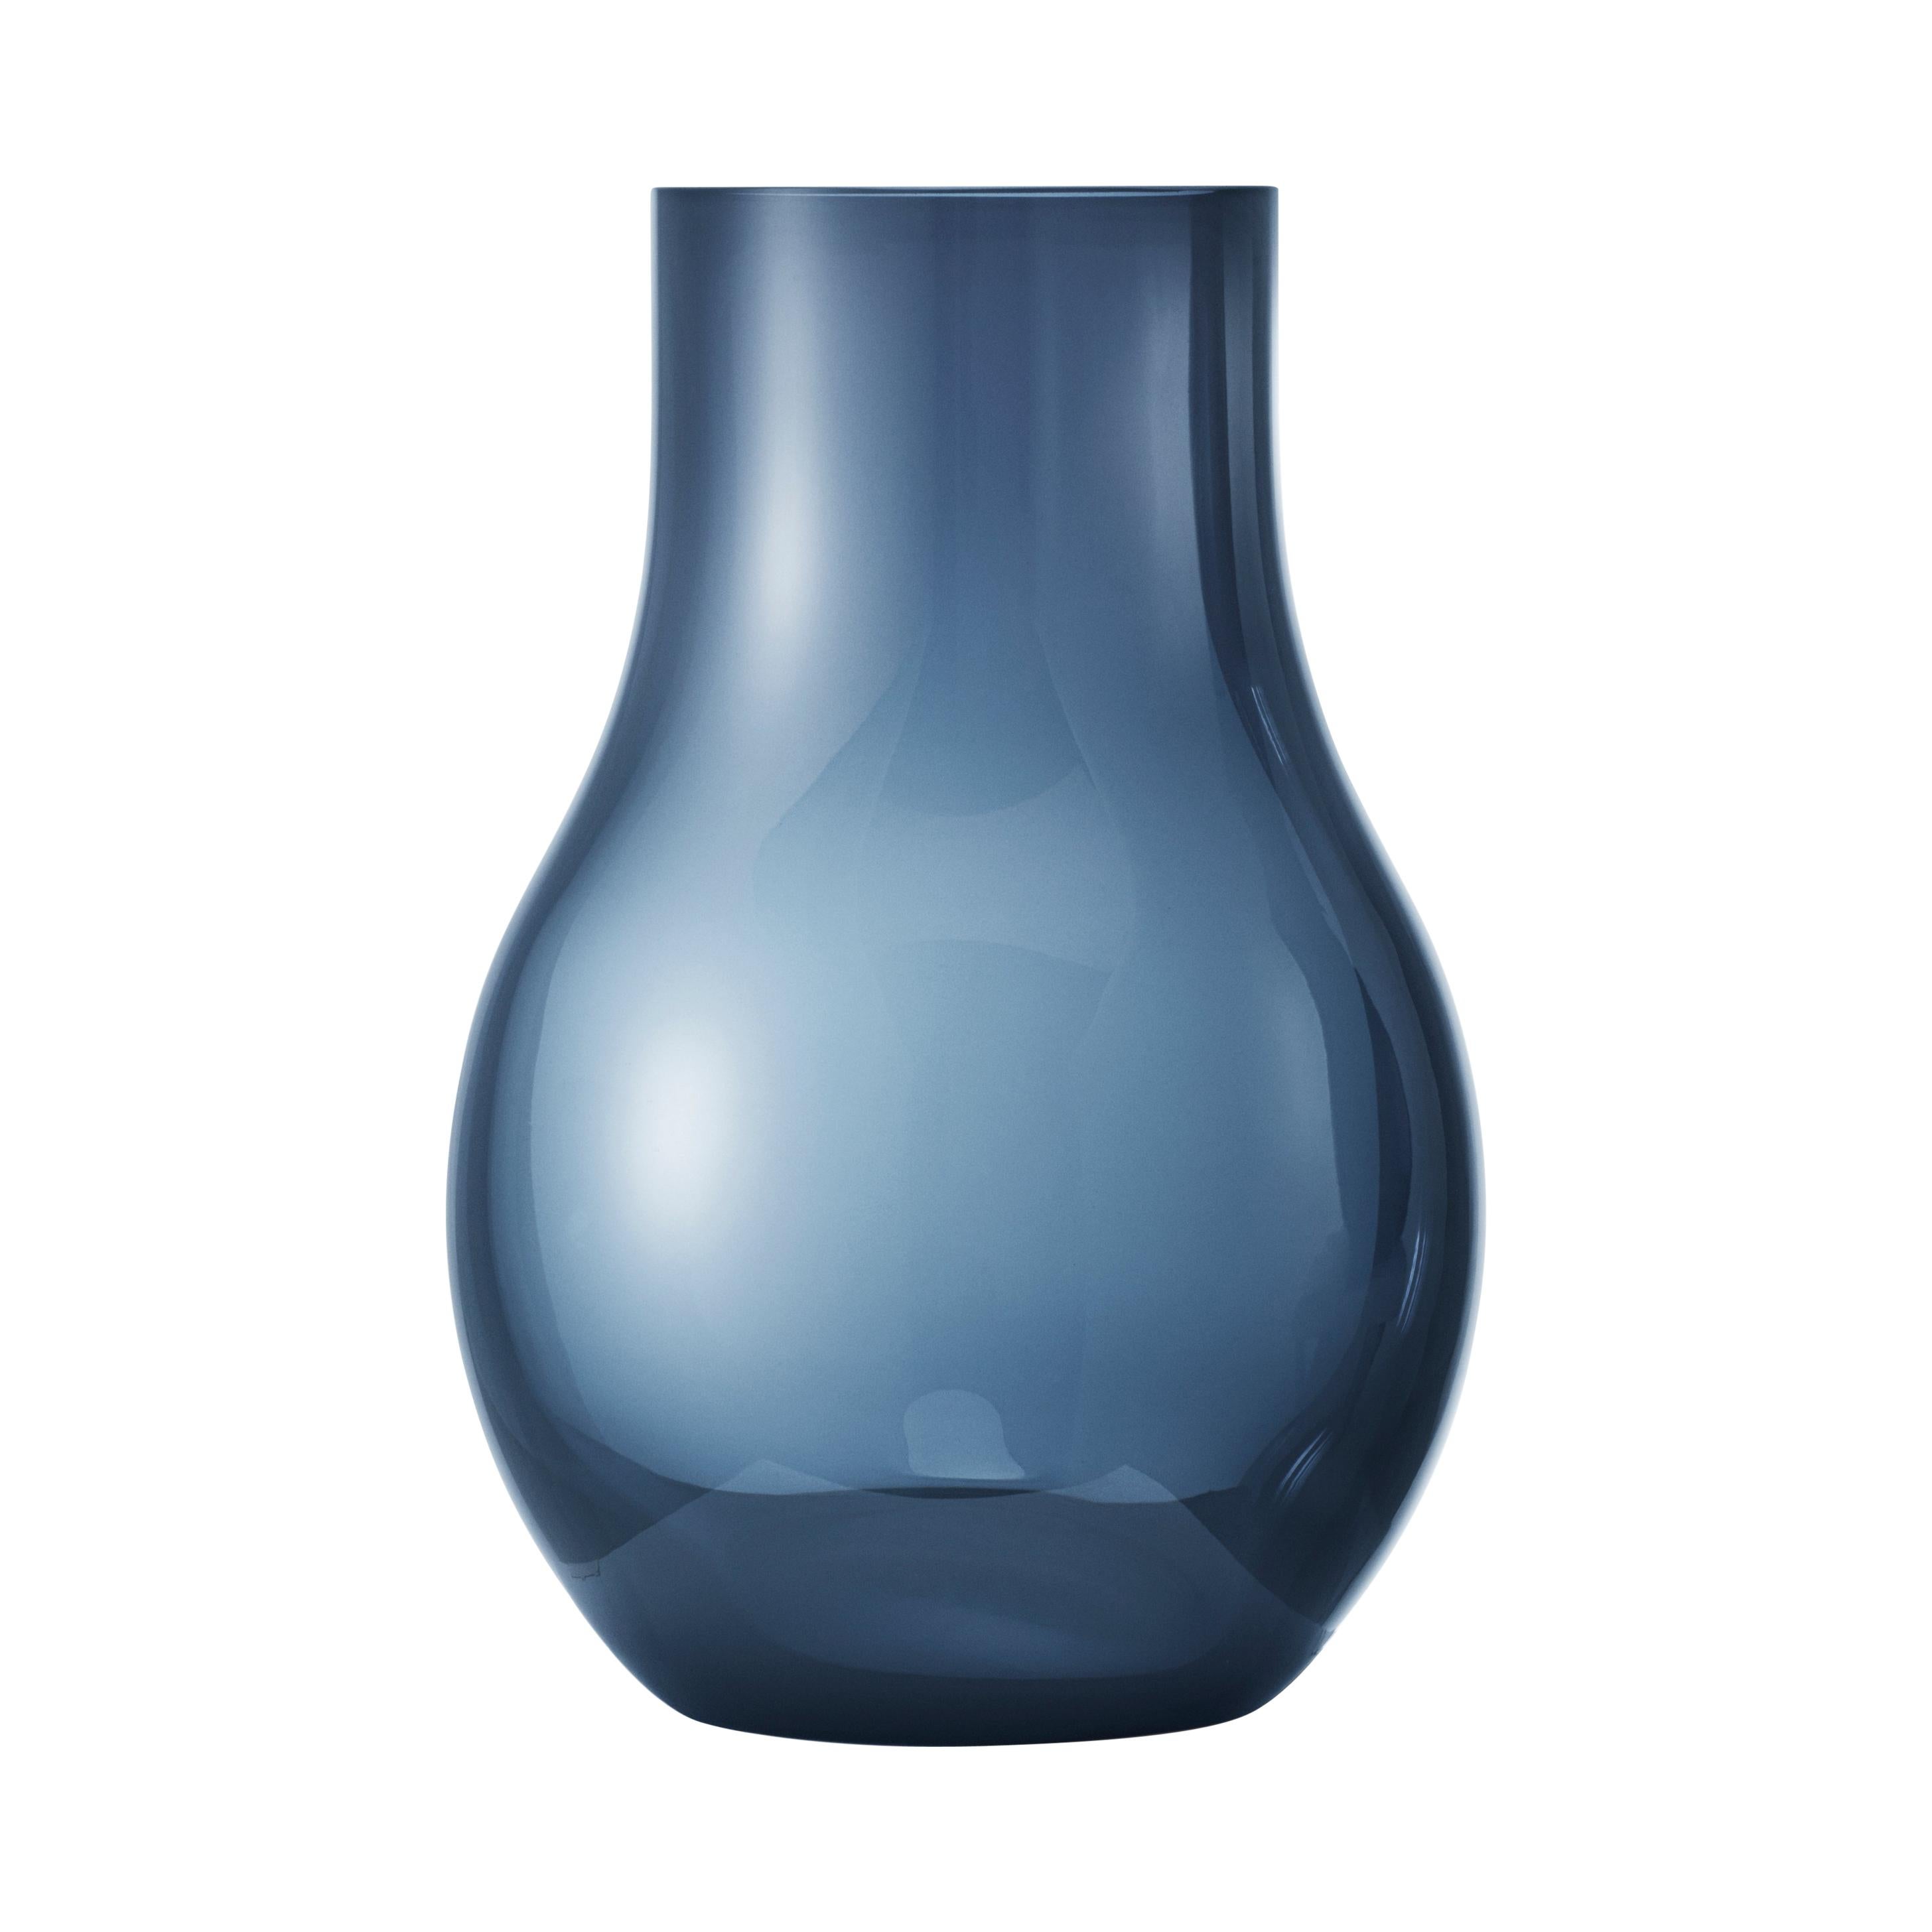 Georg Jensen Cafu Small Vase in Blue Glass by Holmbäck Nordentoft